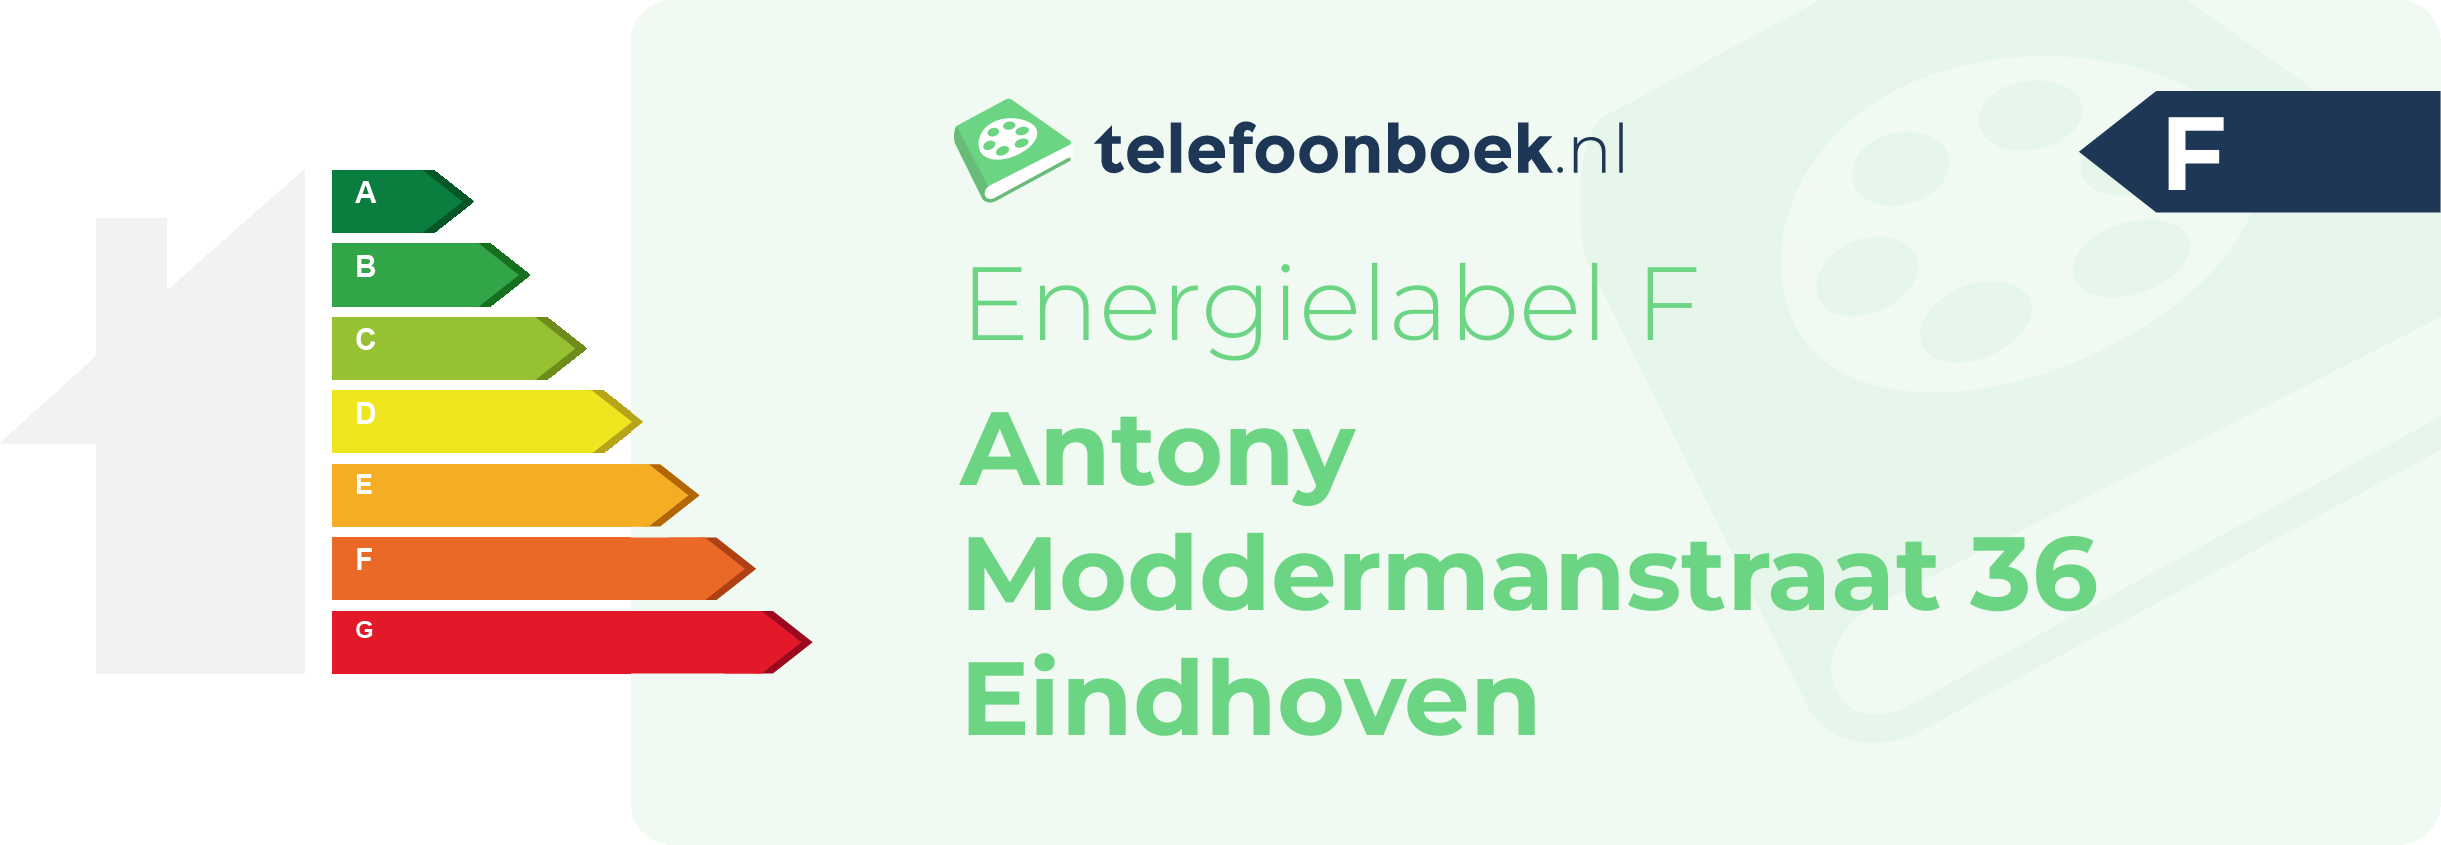 Energielabel Antony Moddermanstraat 36 Eindhoven